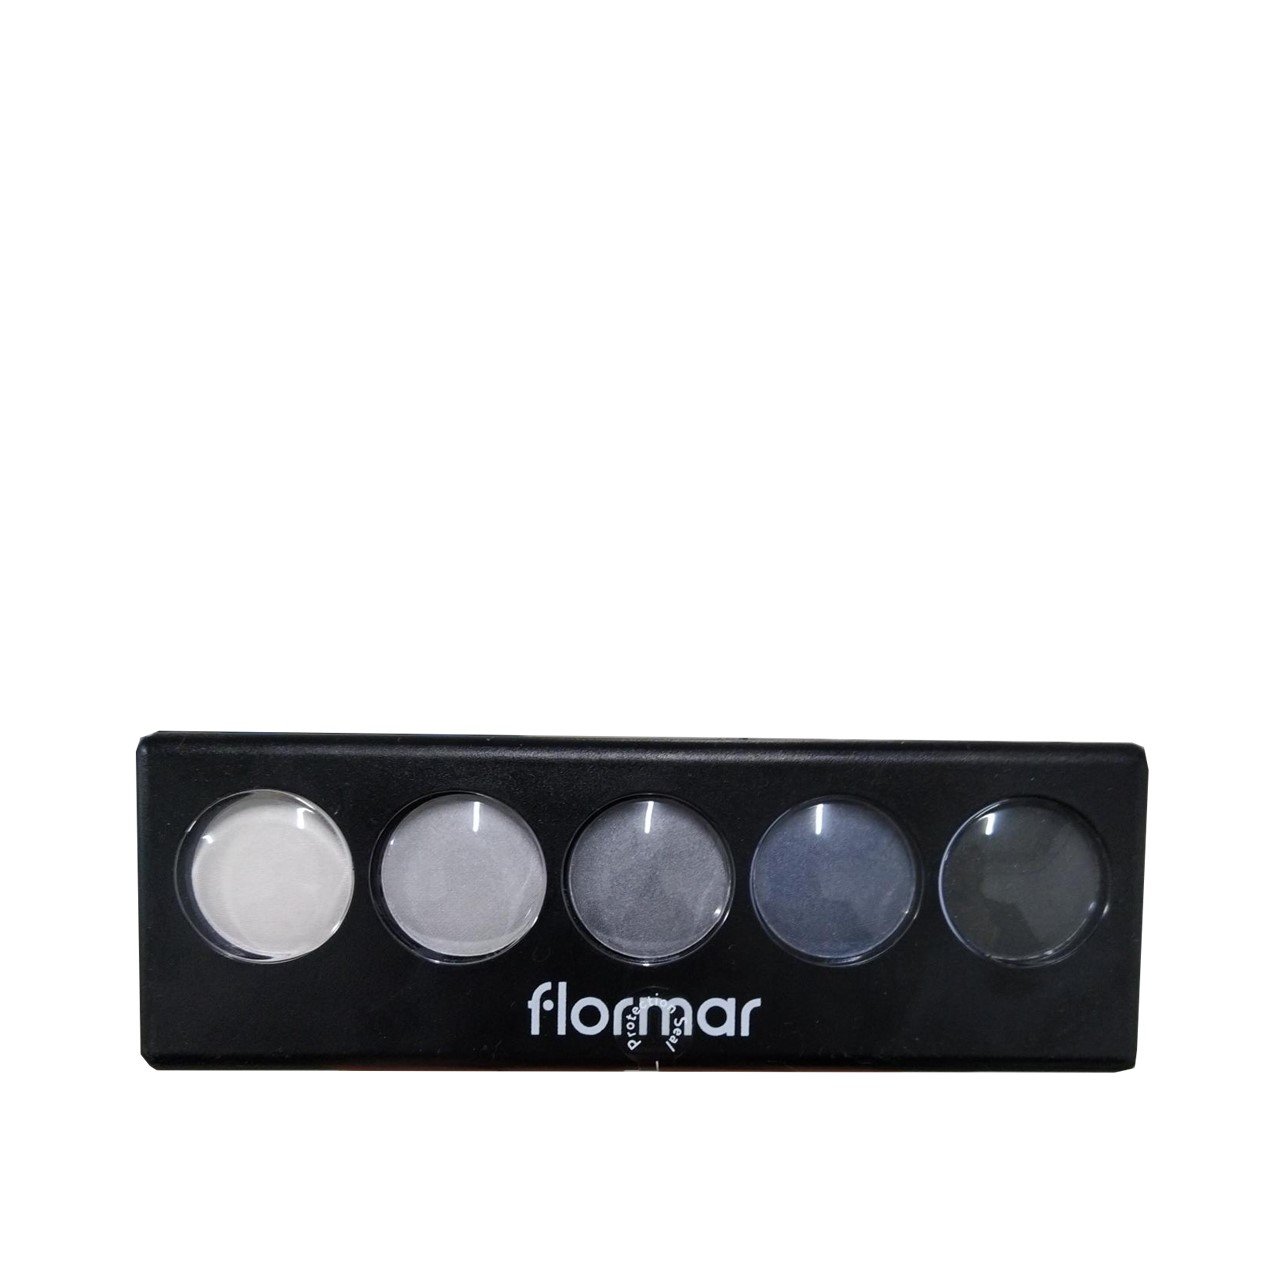 Flormar Color Palette Eyeshadow 05 Black Dust 9g (0.32oz)